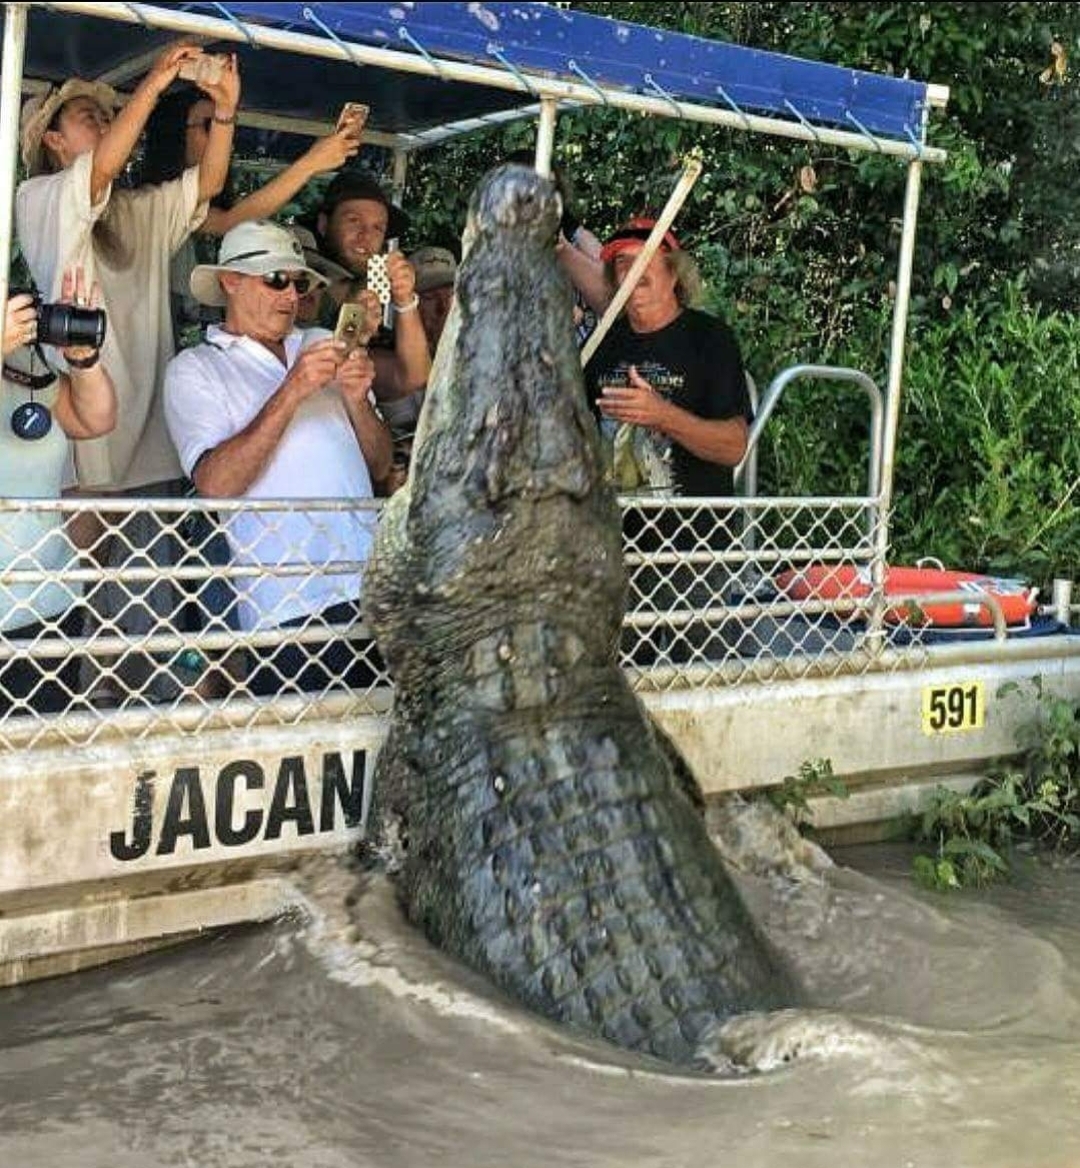 crocodile jumping on boat - 591 Jacan